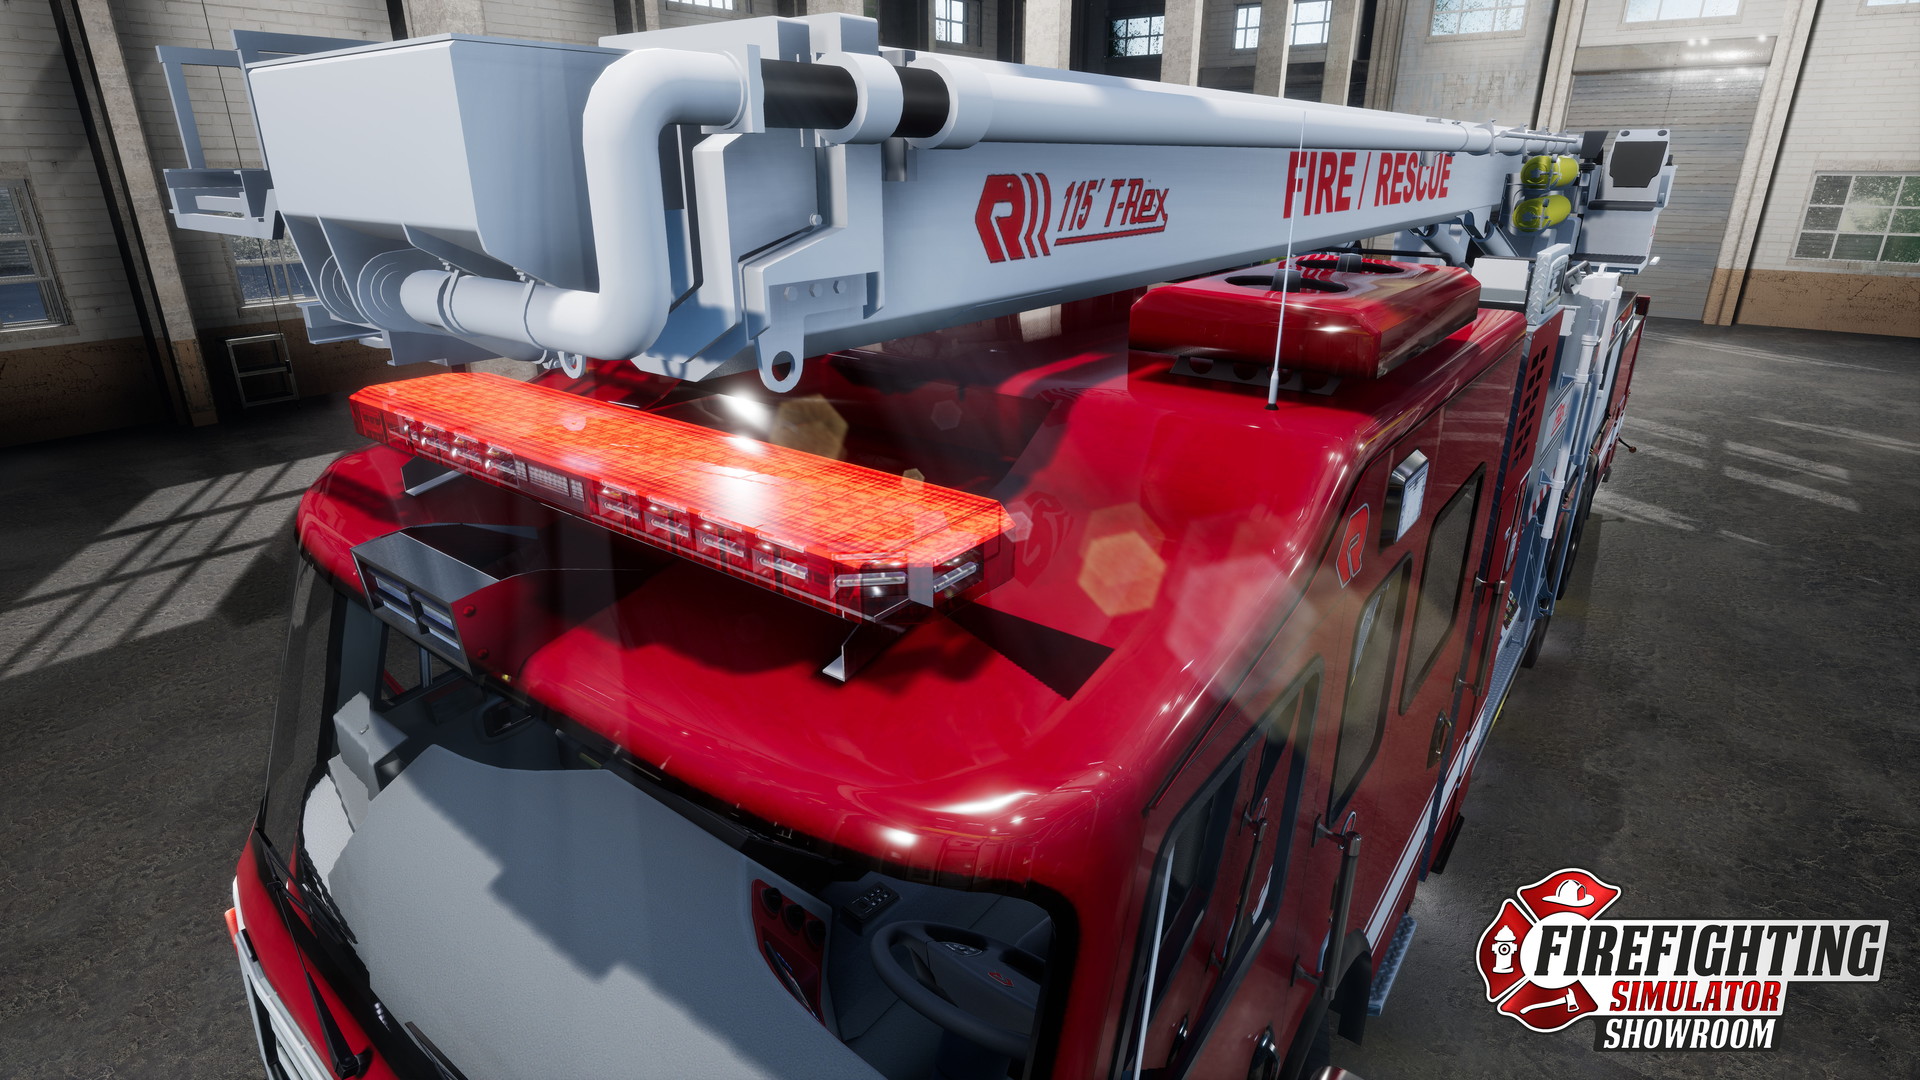 Firefighting Simulator: The Squad - screenshot 1